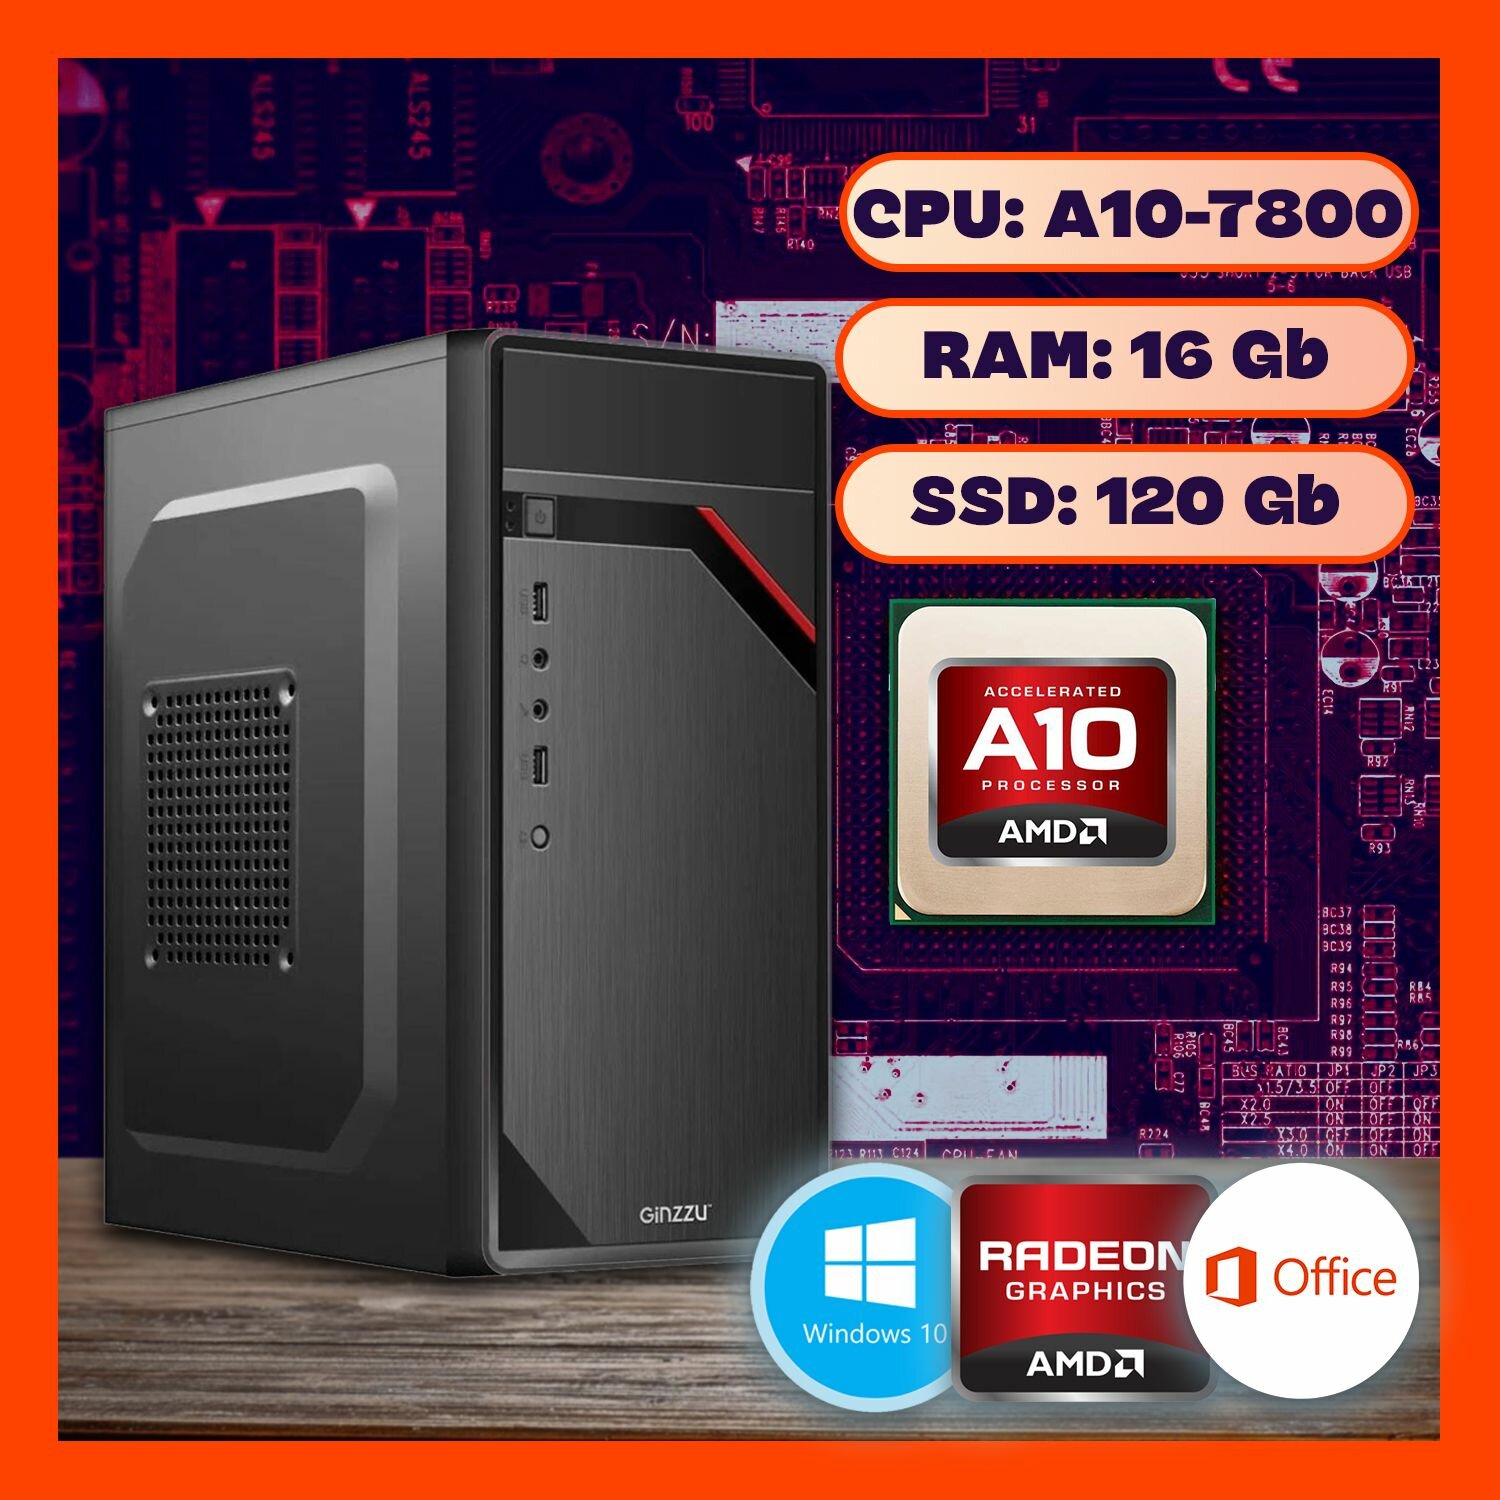 Системный блок AMD A10-7800, RAM 16 Gb, SSD 120 Gb, Windows 10Pro